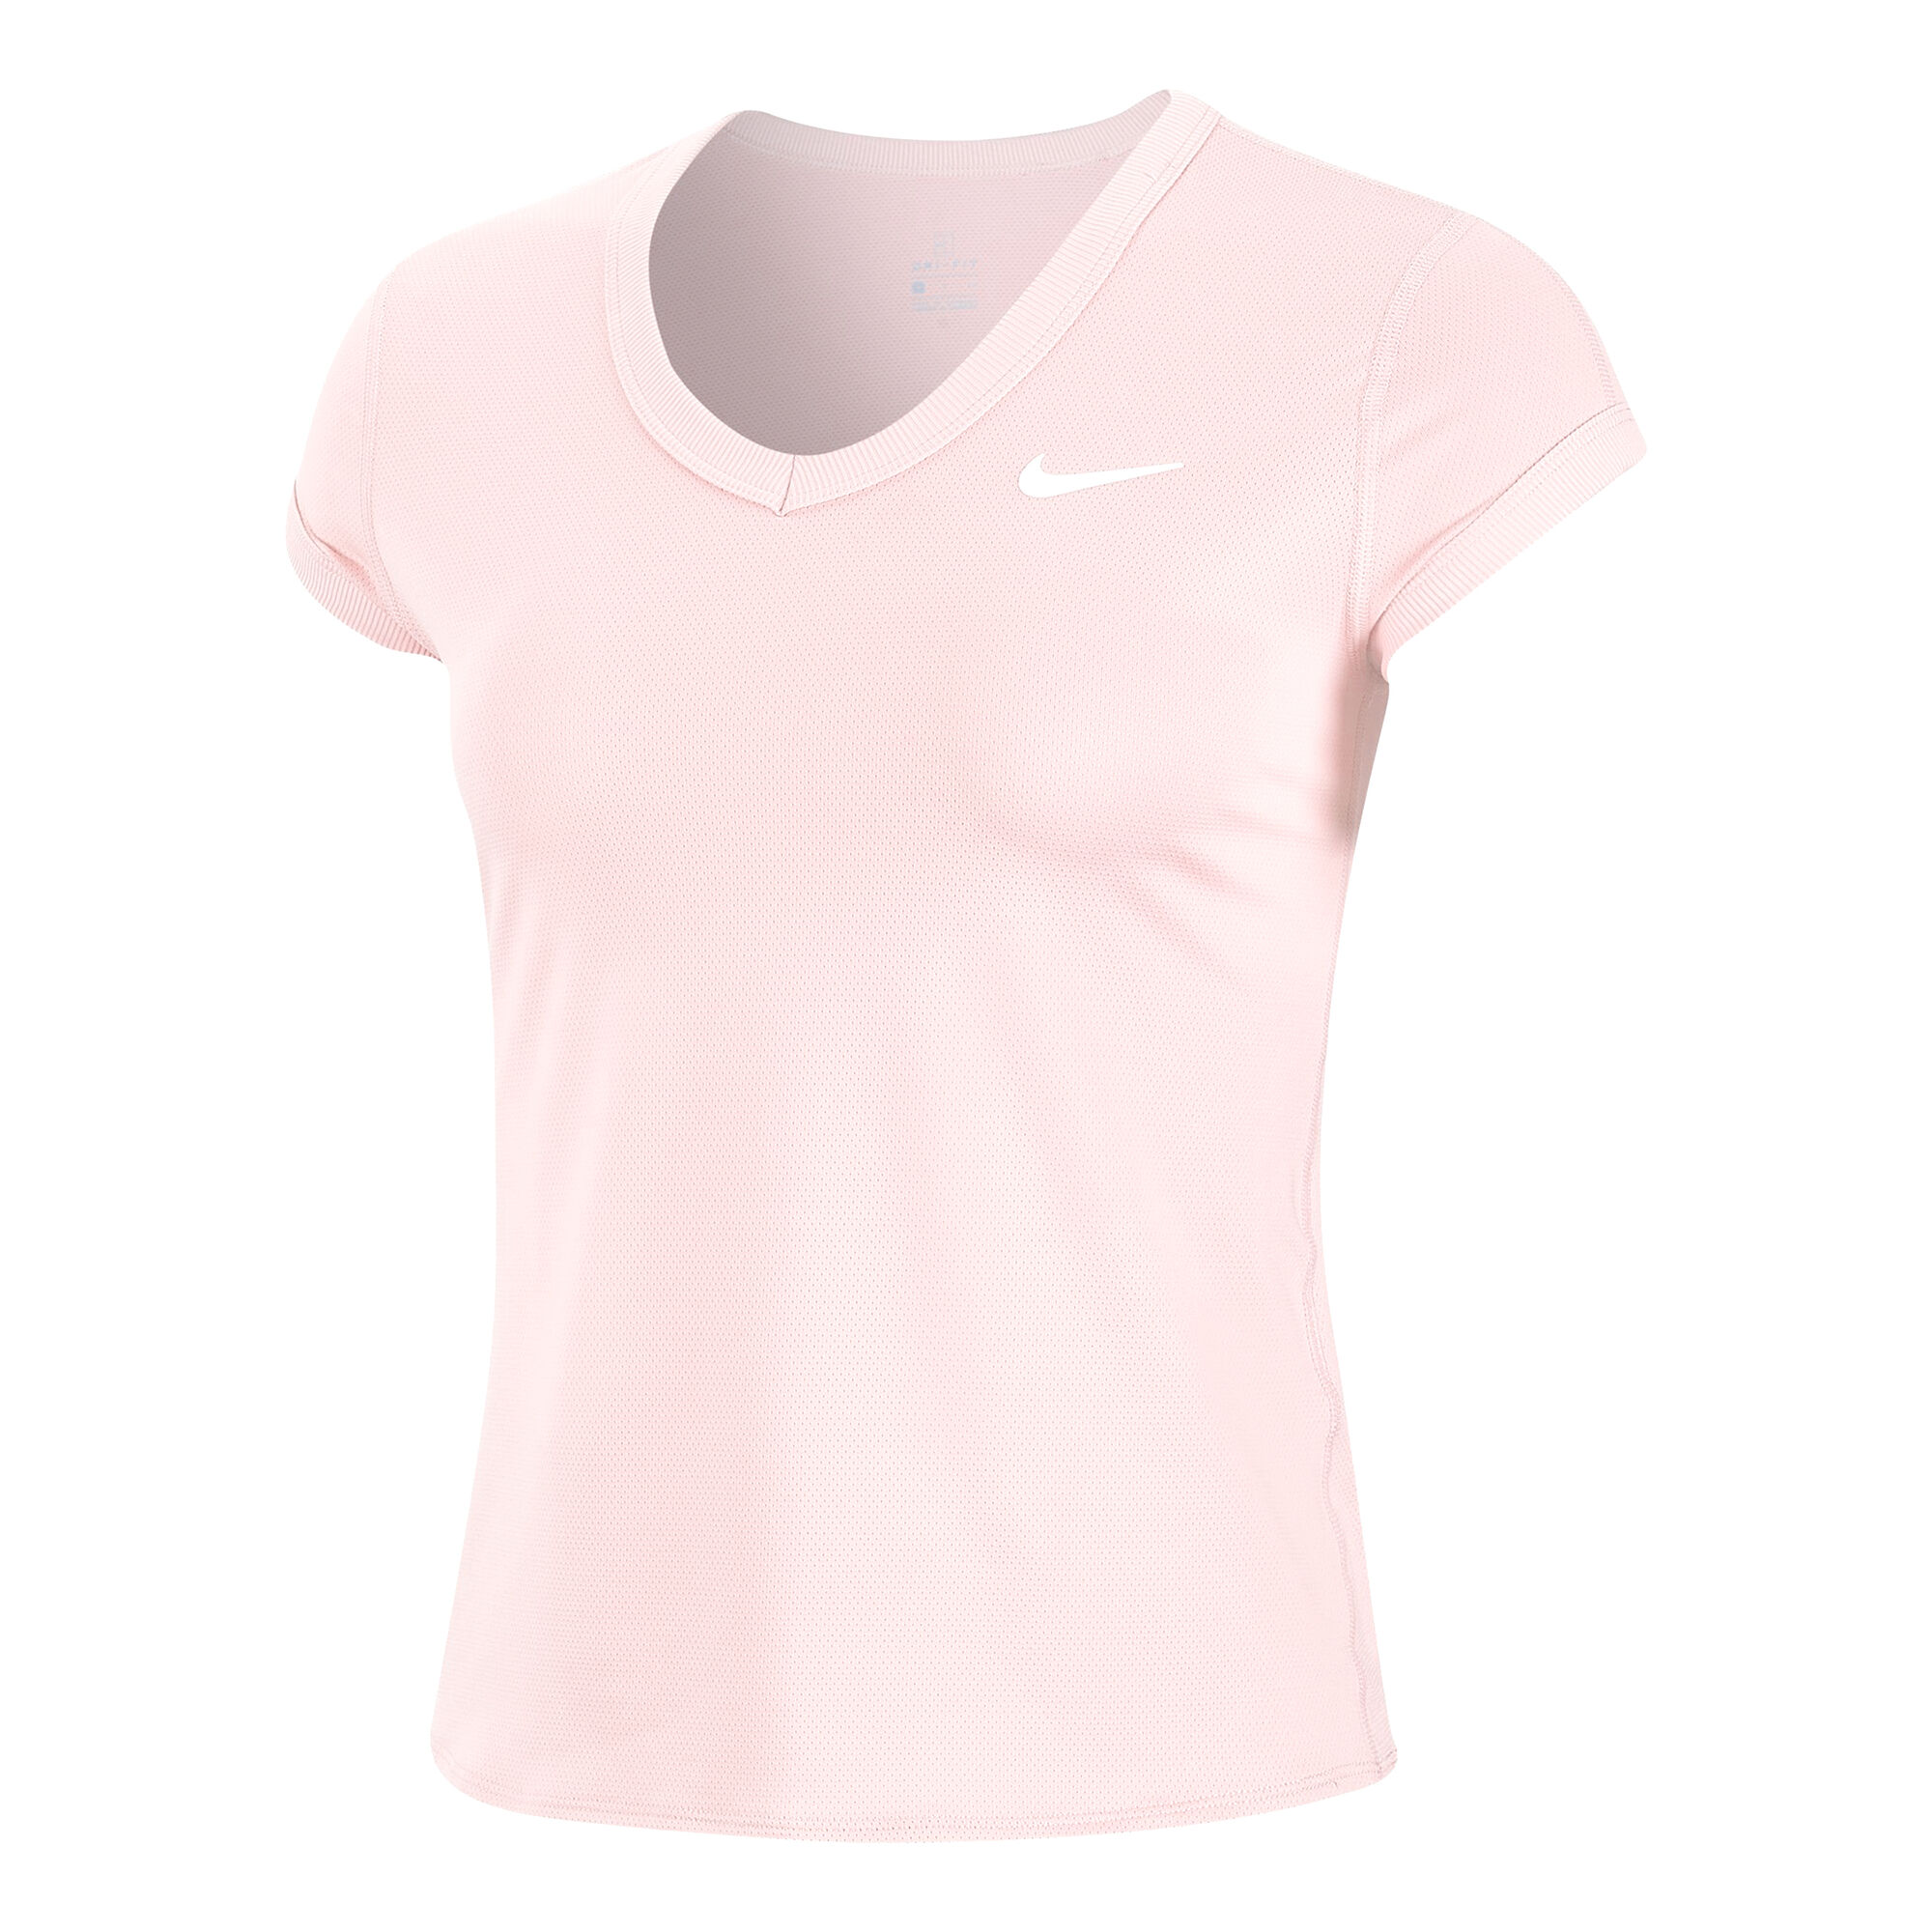 Tee Shirt Femme NikeCourt Dri-FIT Rose : Achat NikeCourt Dri-FIT